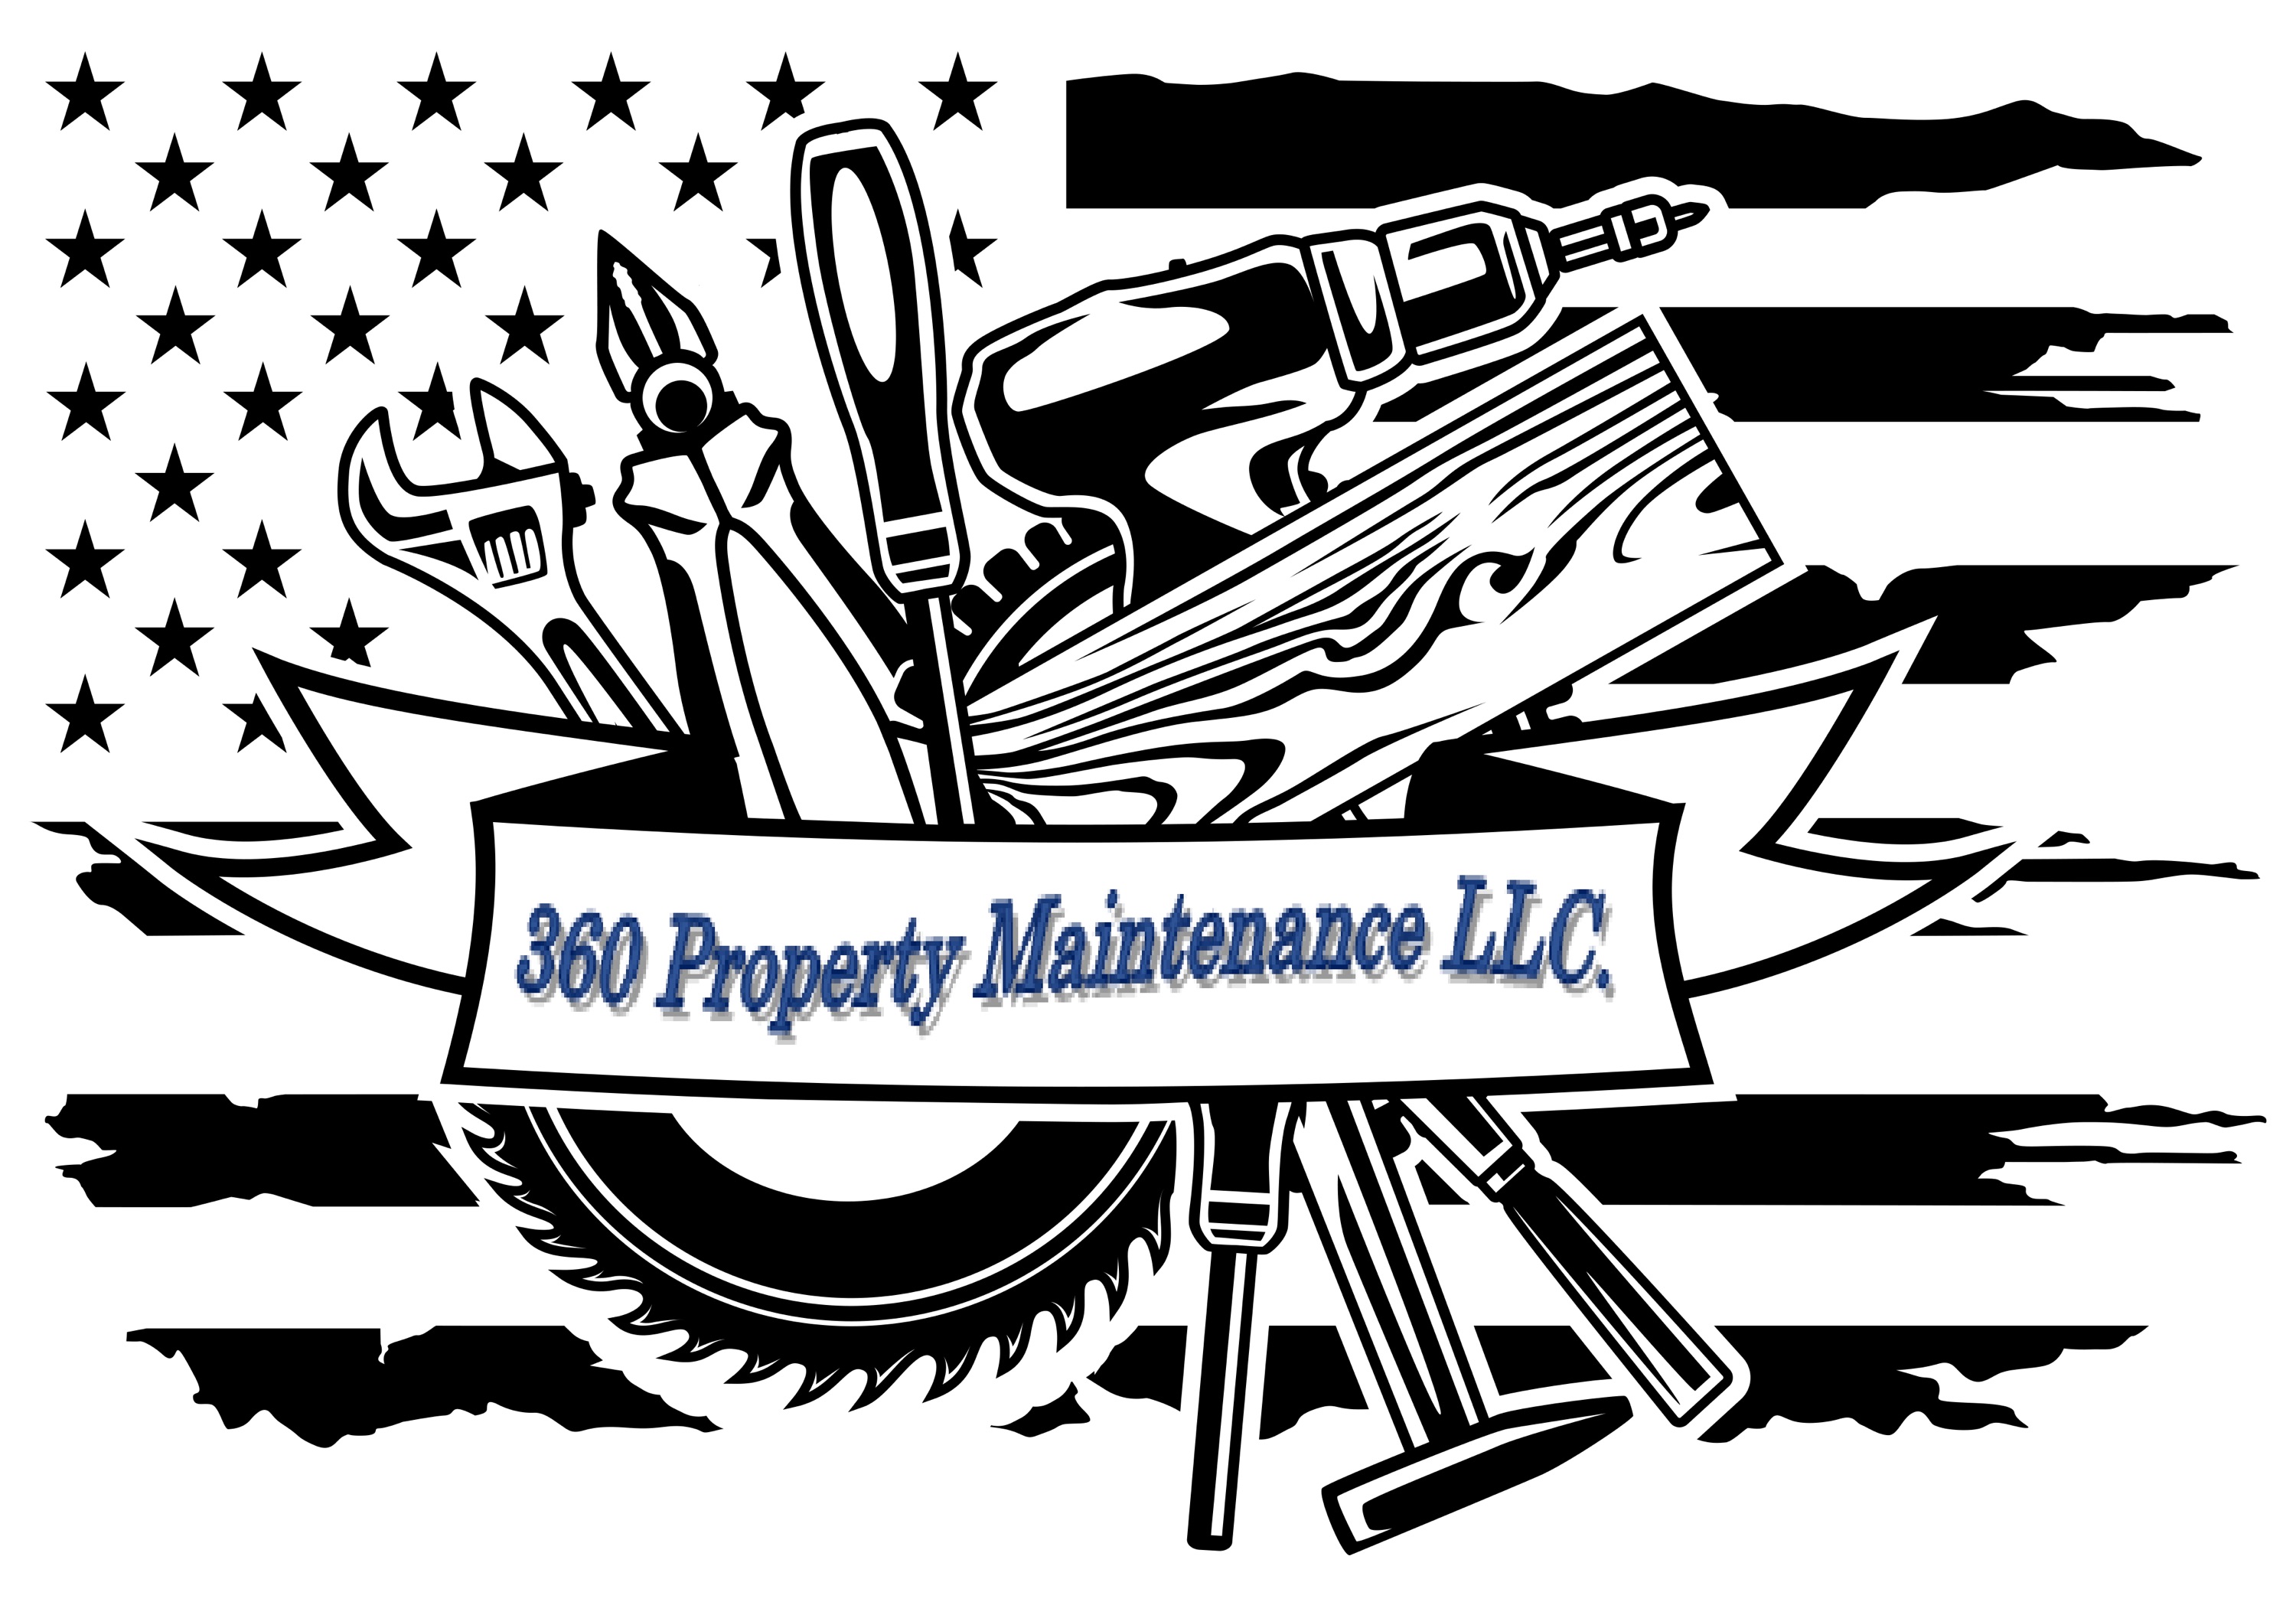 360 Property Maintenance, LLC Logo